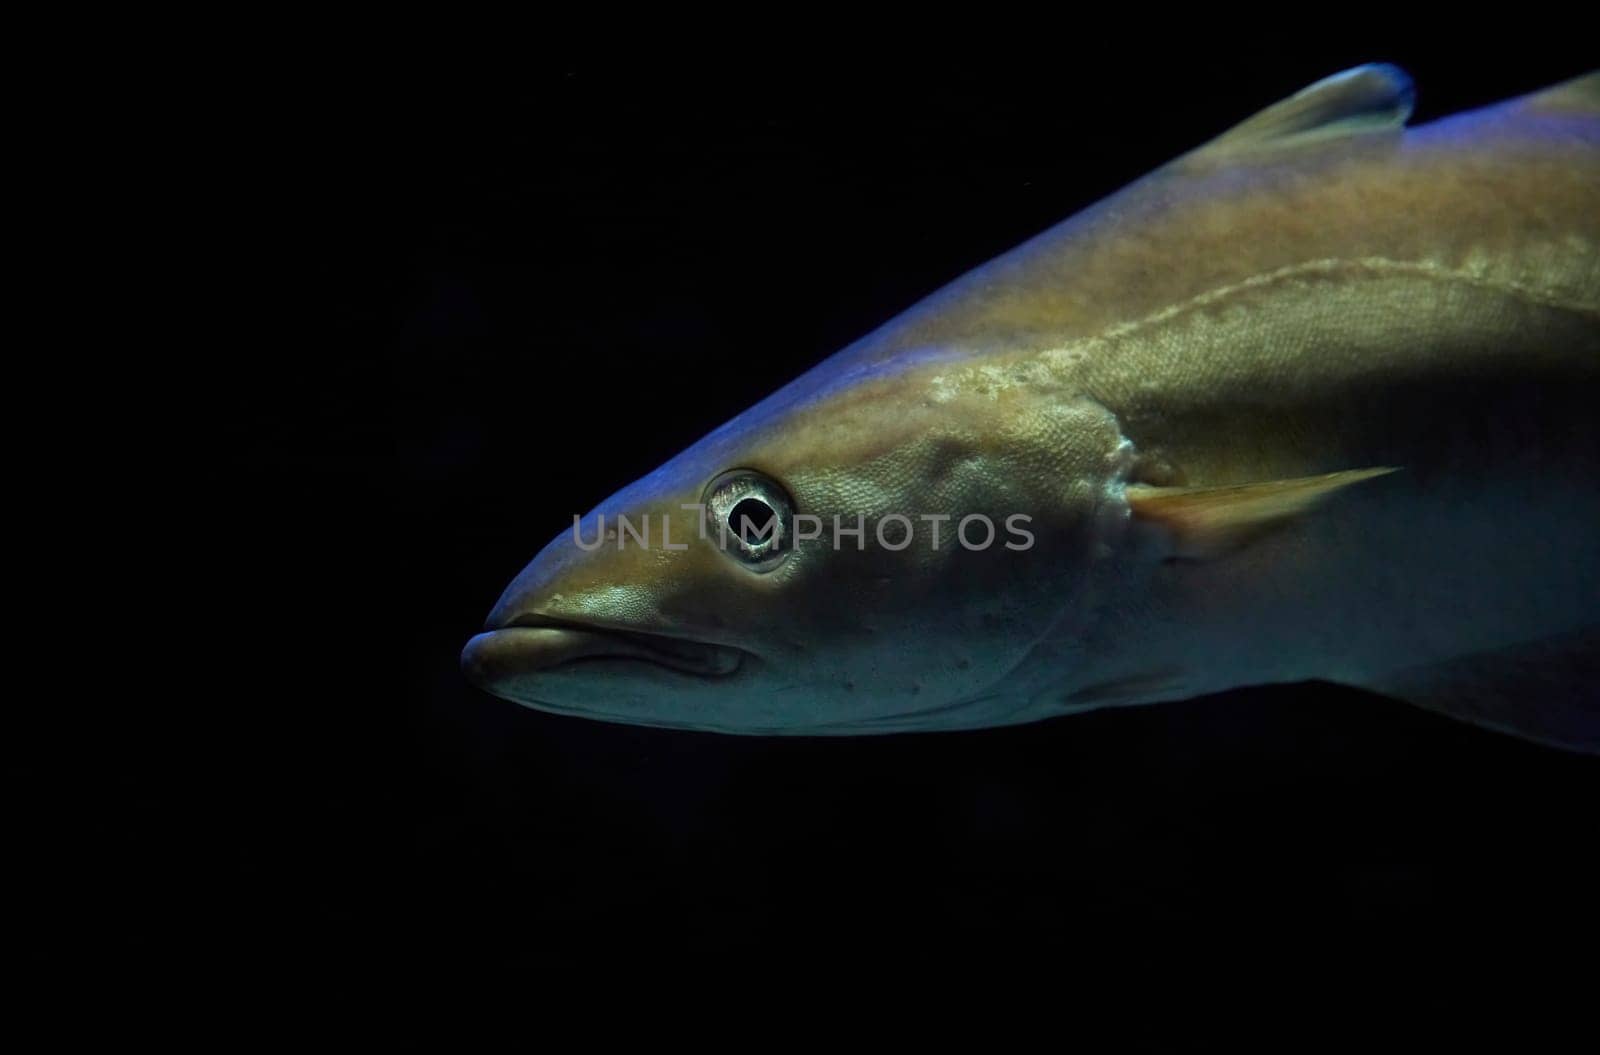 Fish close up in dark waters in Denmark. Underwater photo.